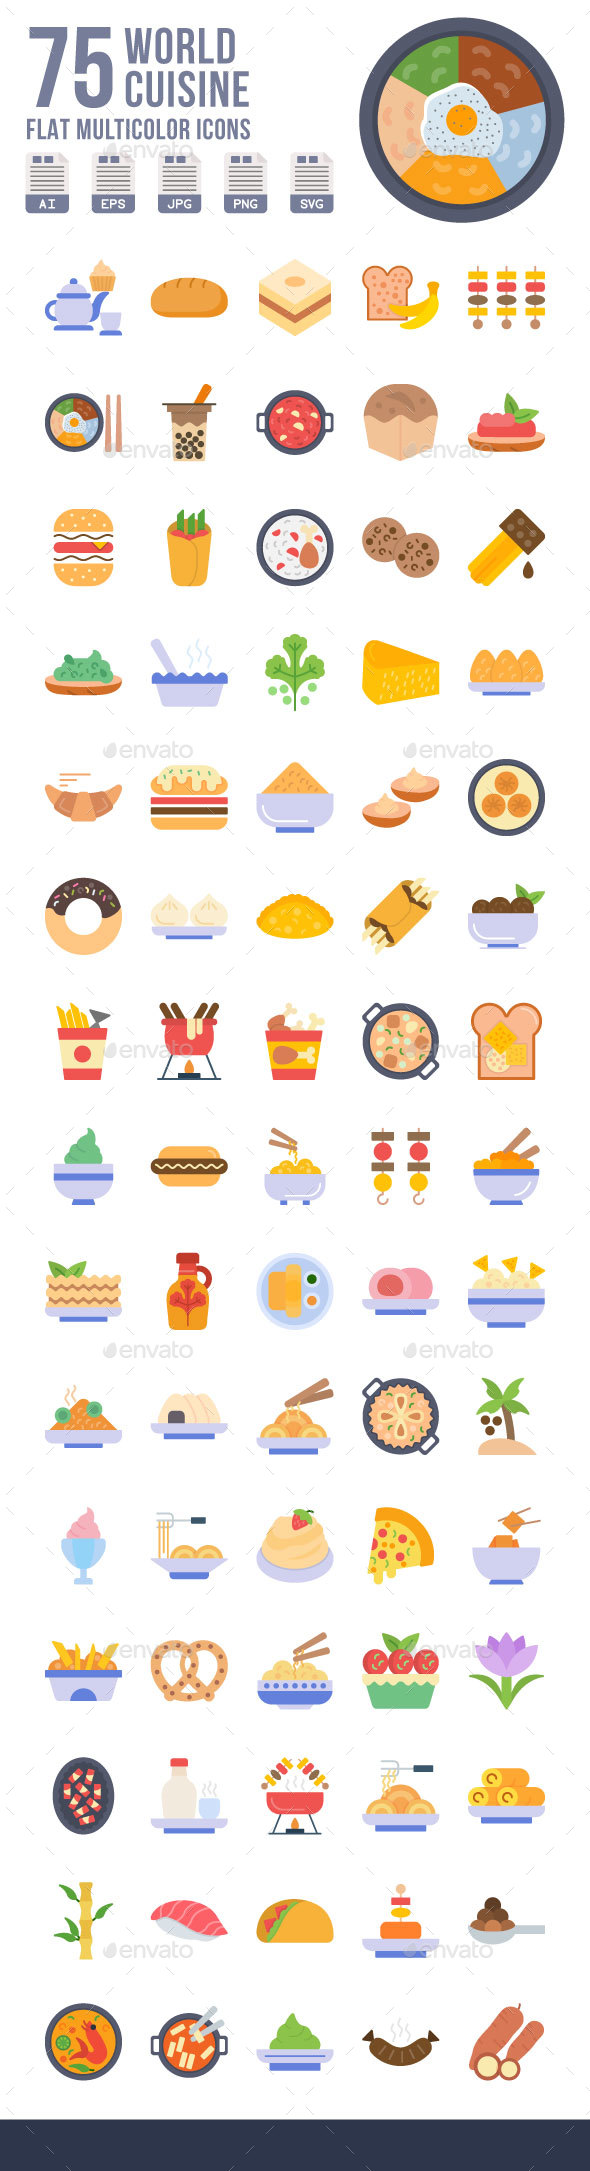 World Cuisine Flat Icons